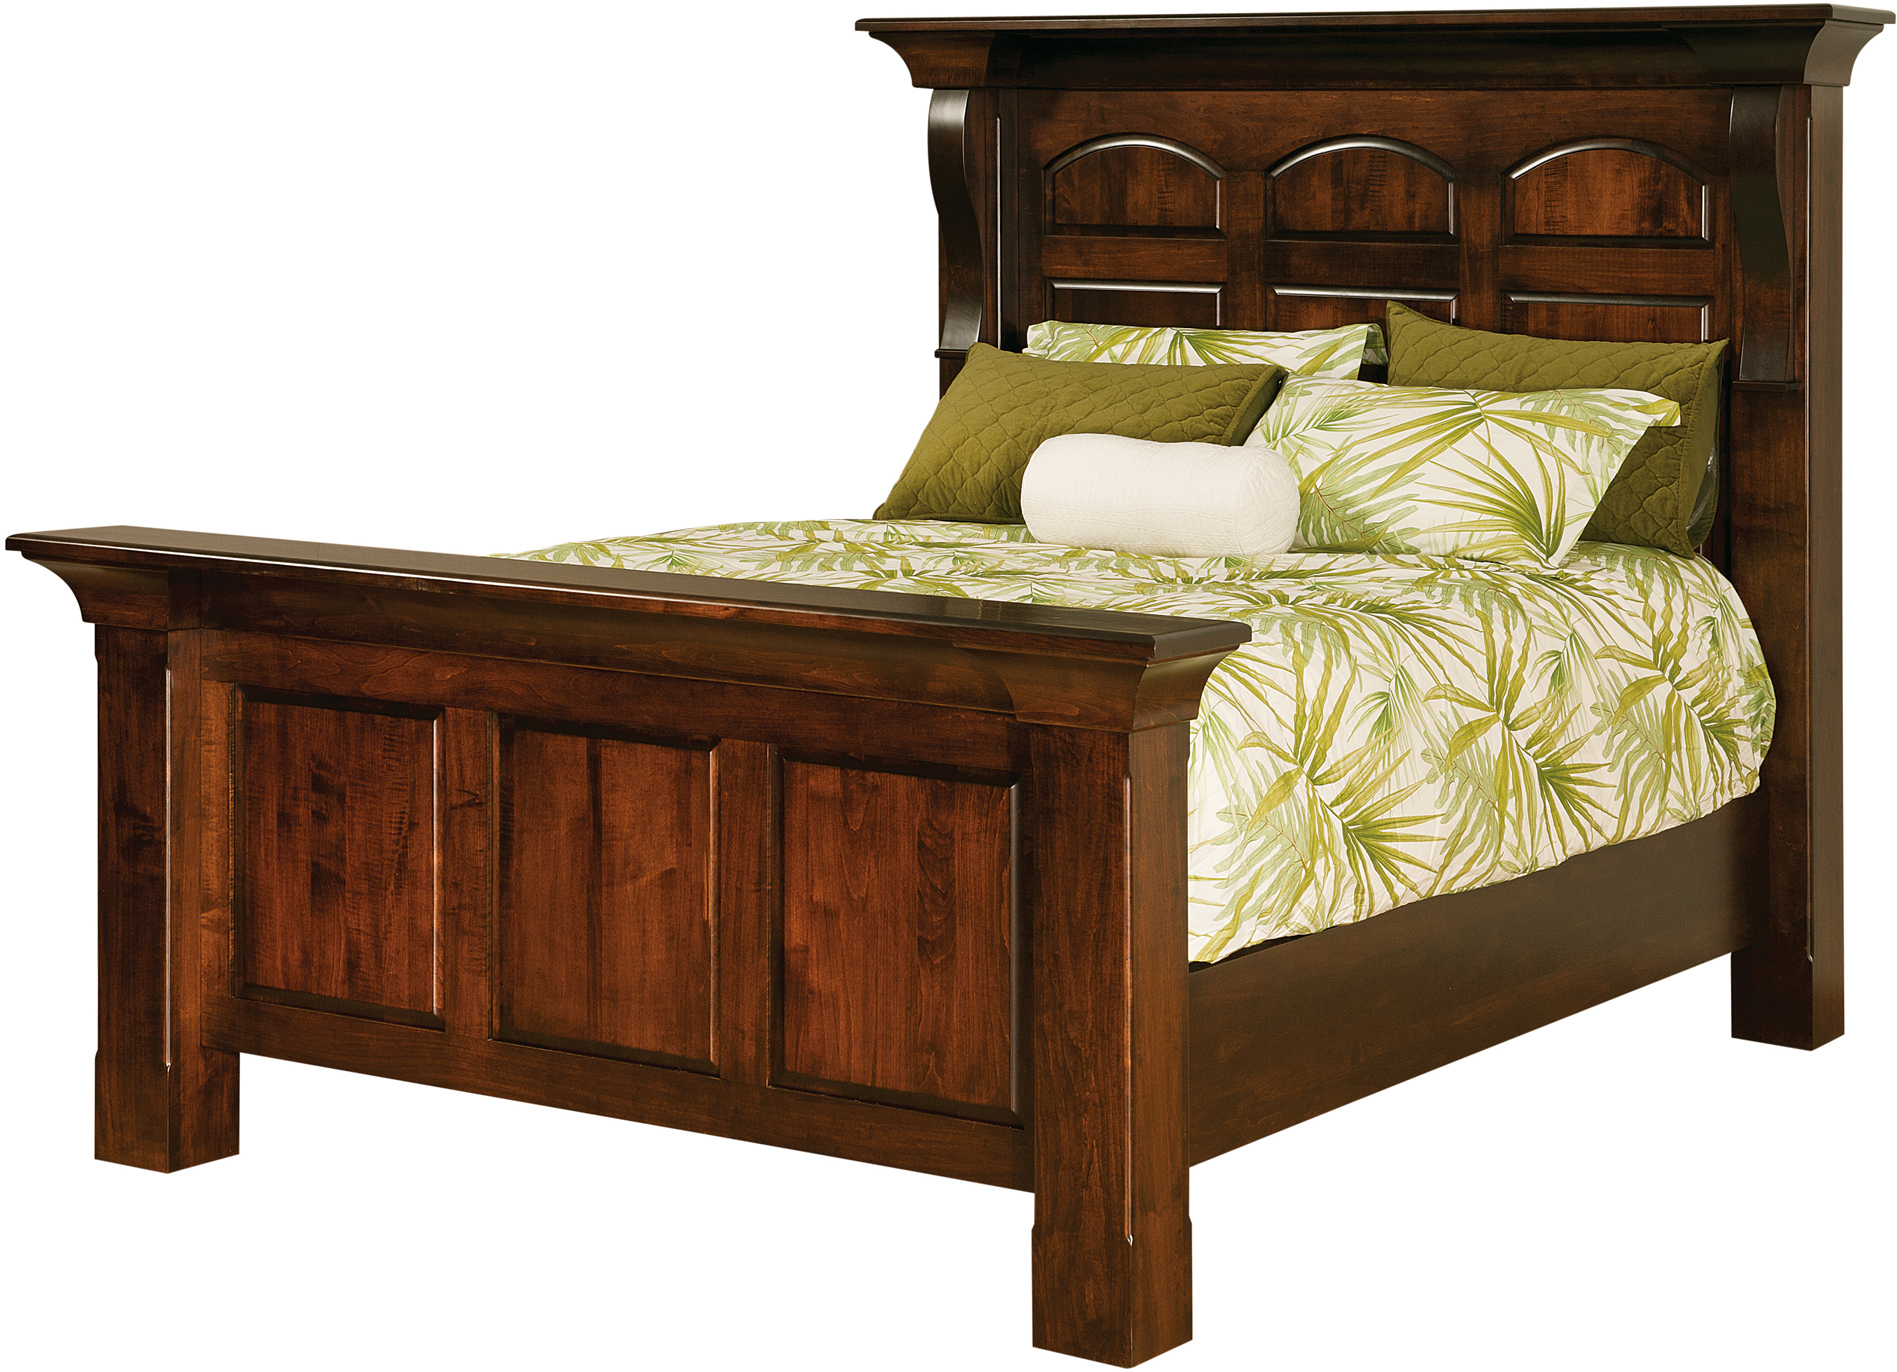 hamilton oak bedroom furniture